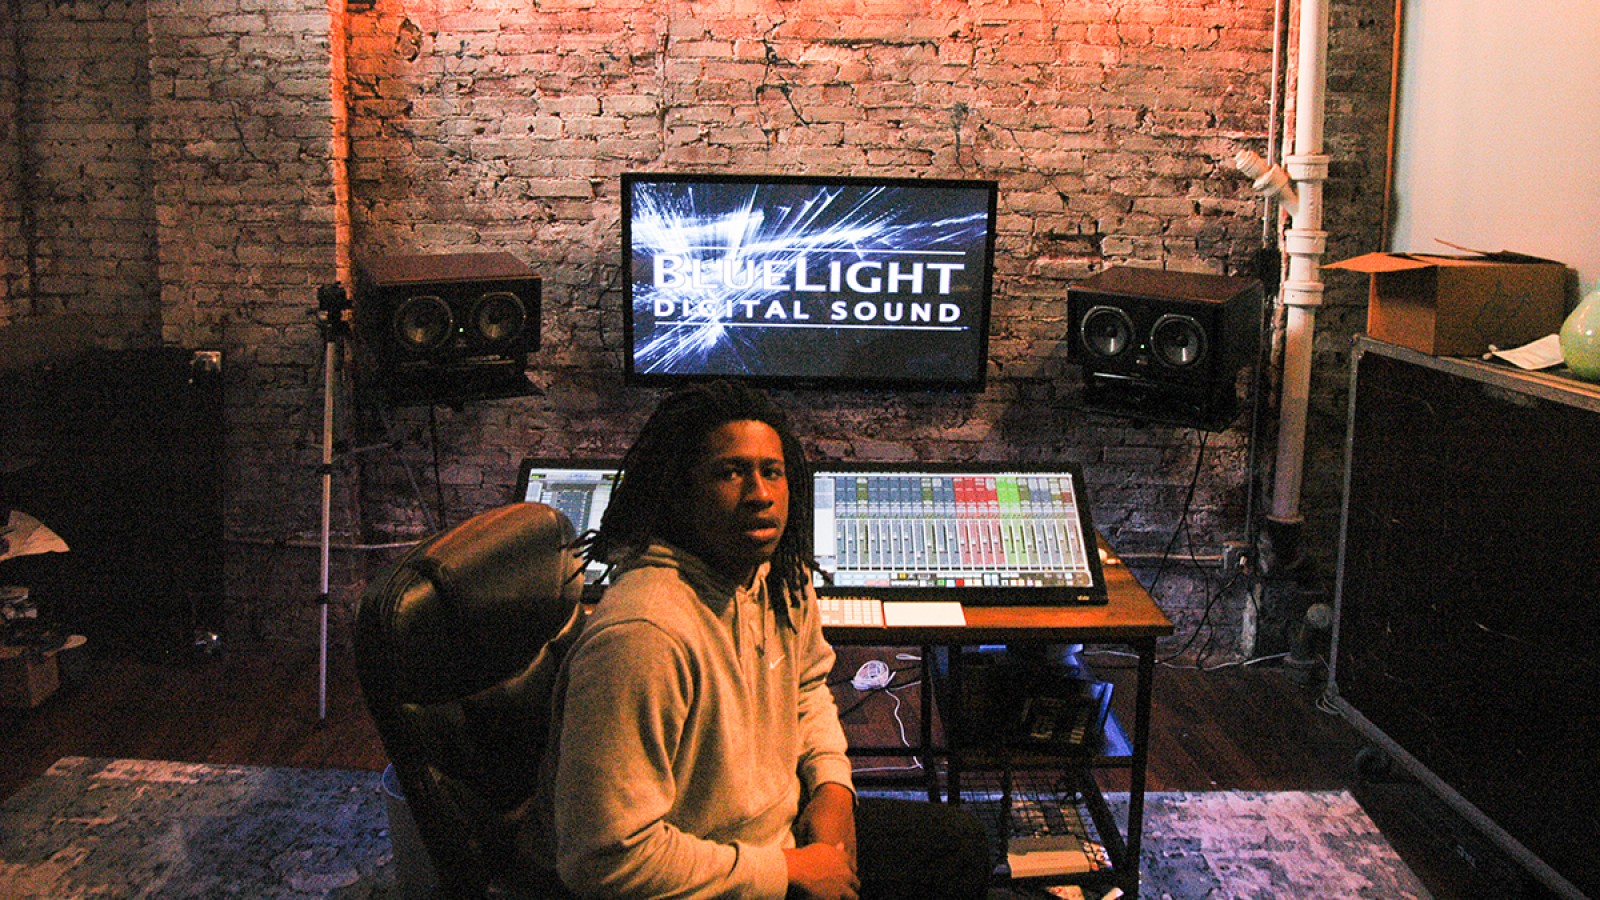 Asher at Bluelight Digital Sound